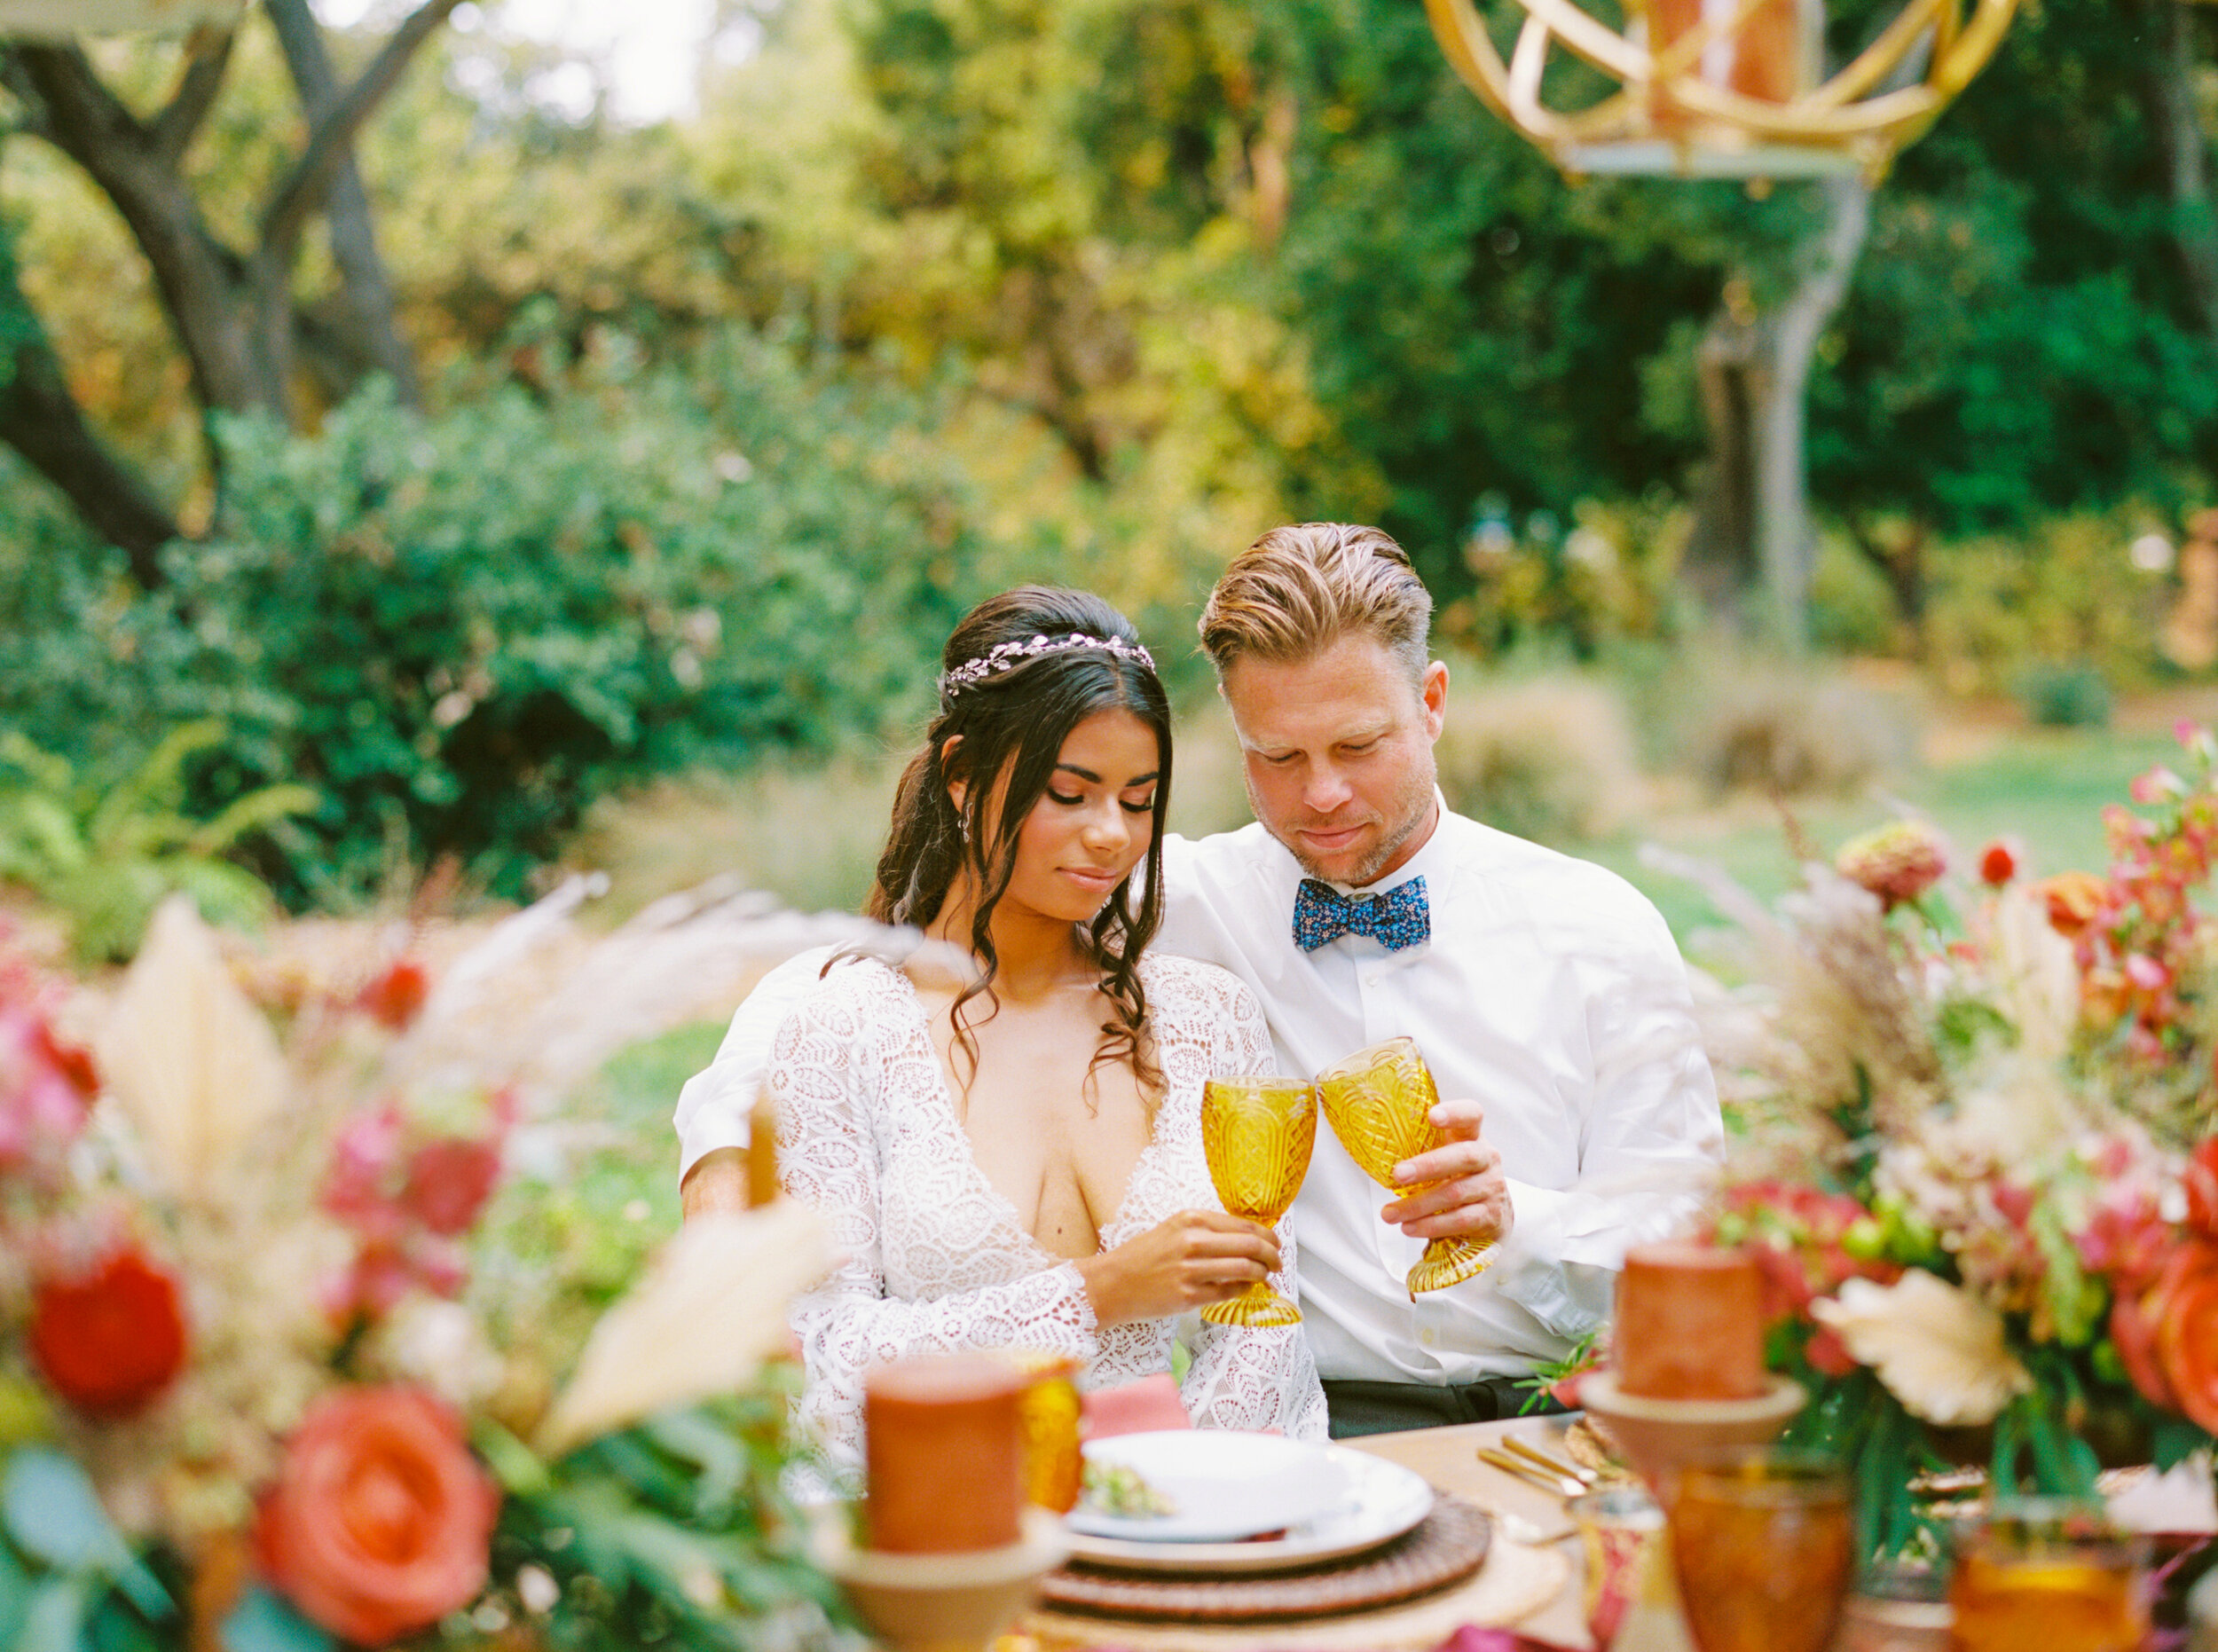 Sarahi Hadden - An Earthy Summer Boho Inspired Wedding with Sunset Hues at Gardener Ranch-31.jpg